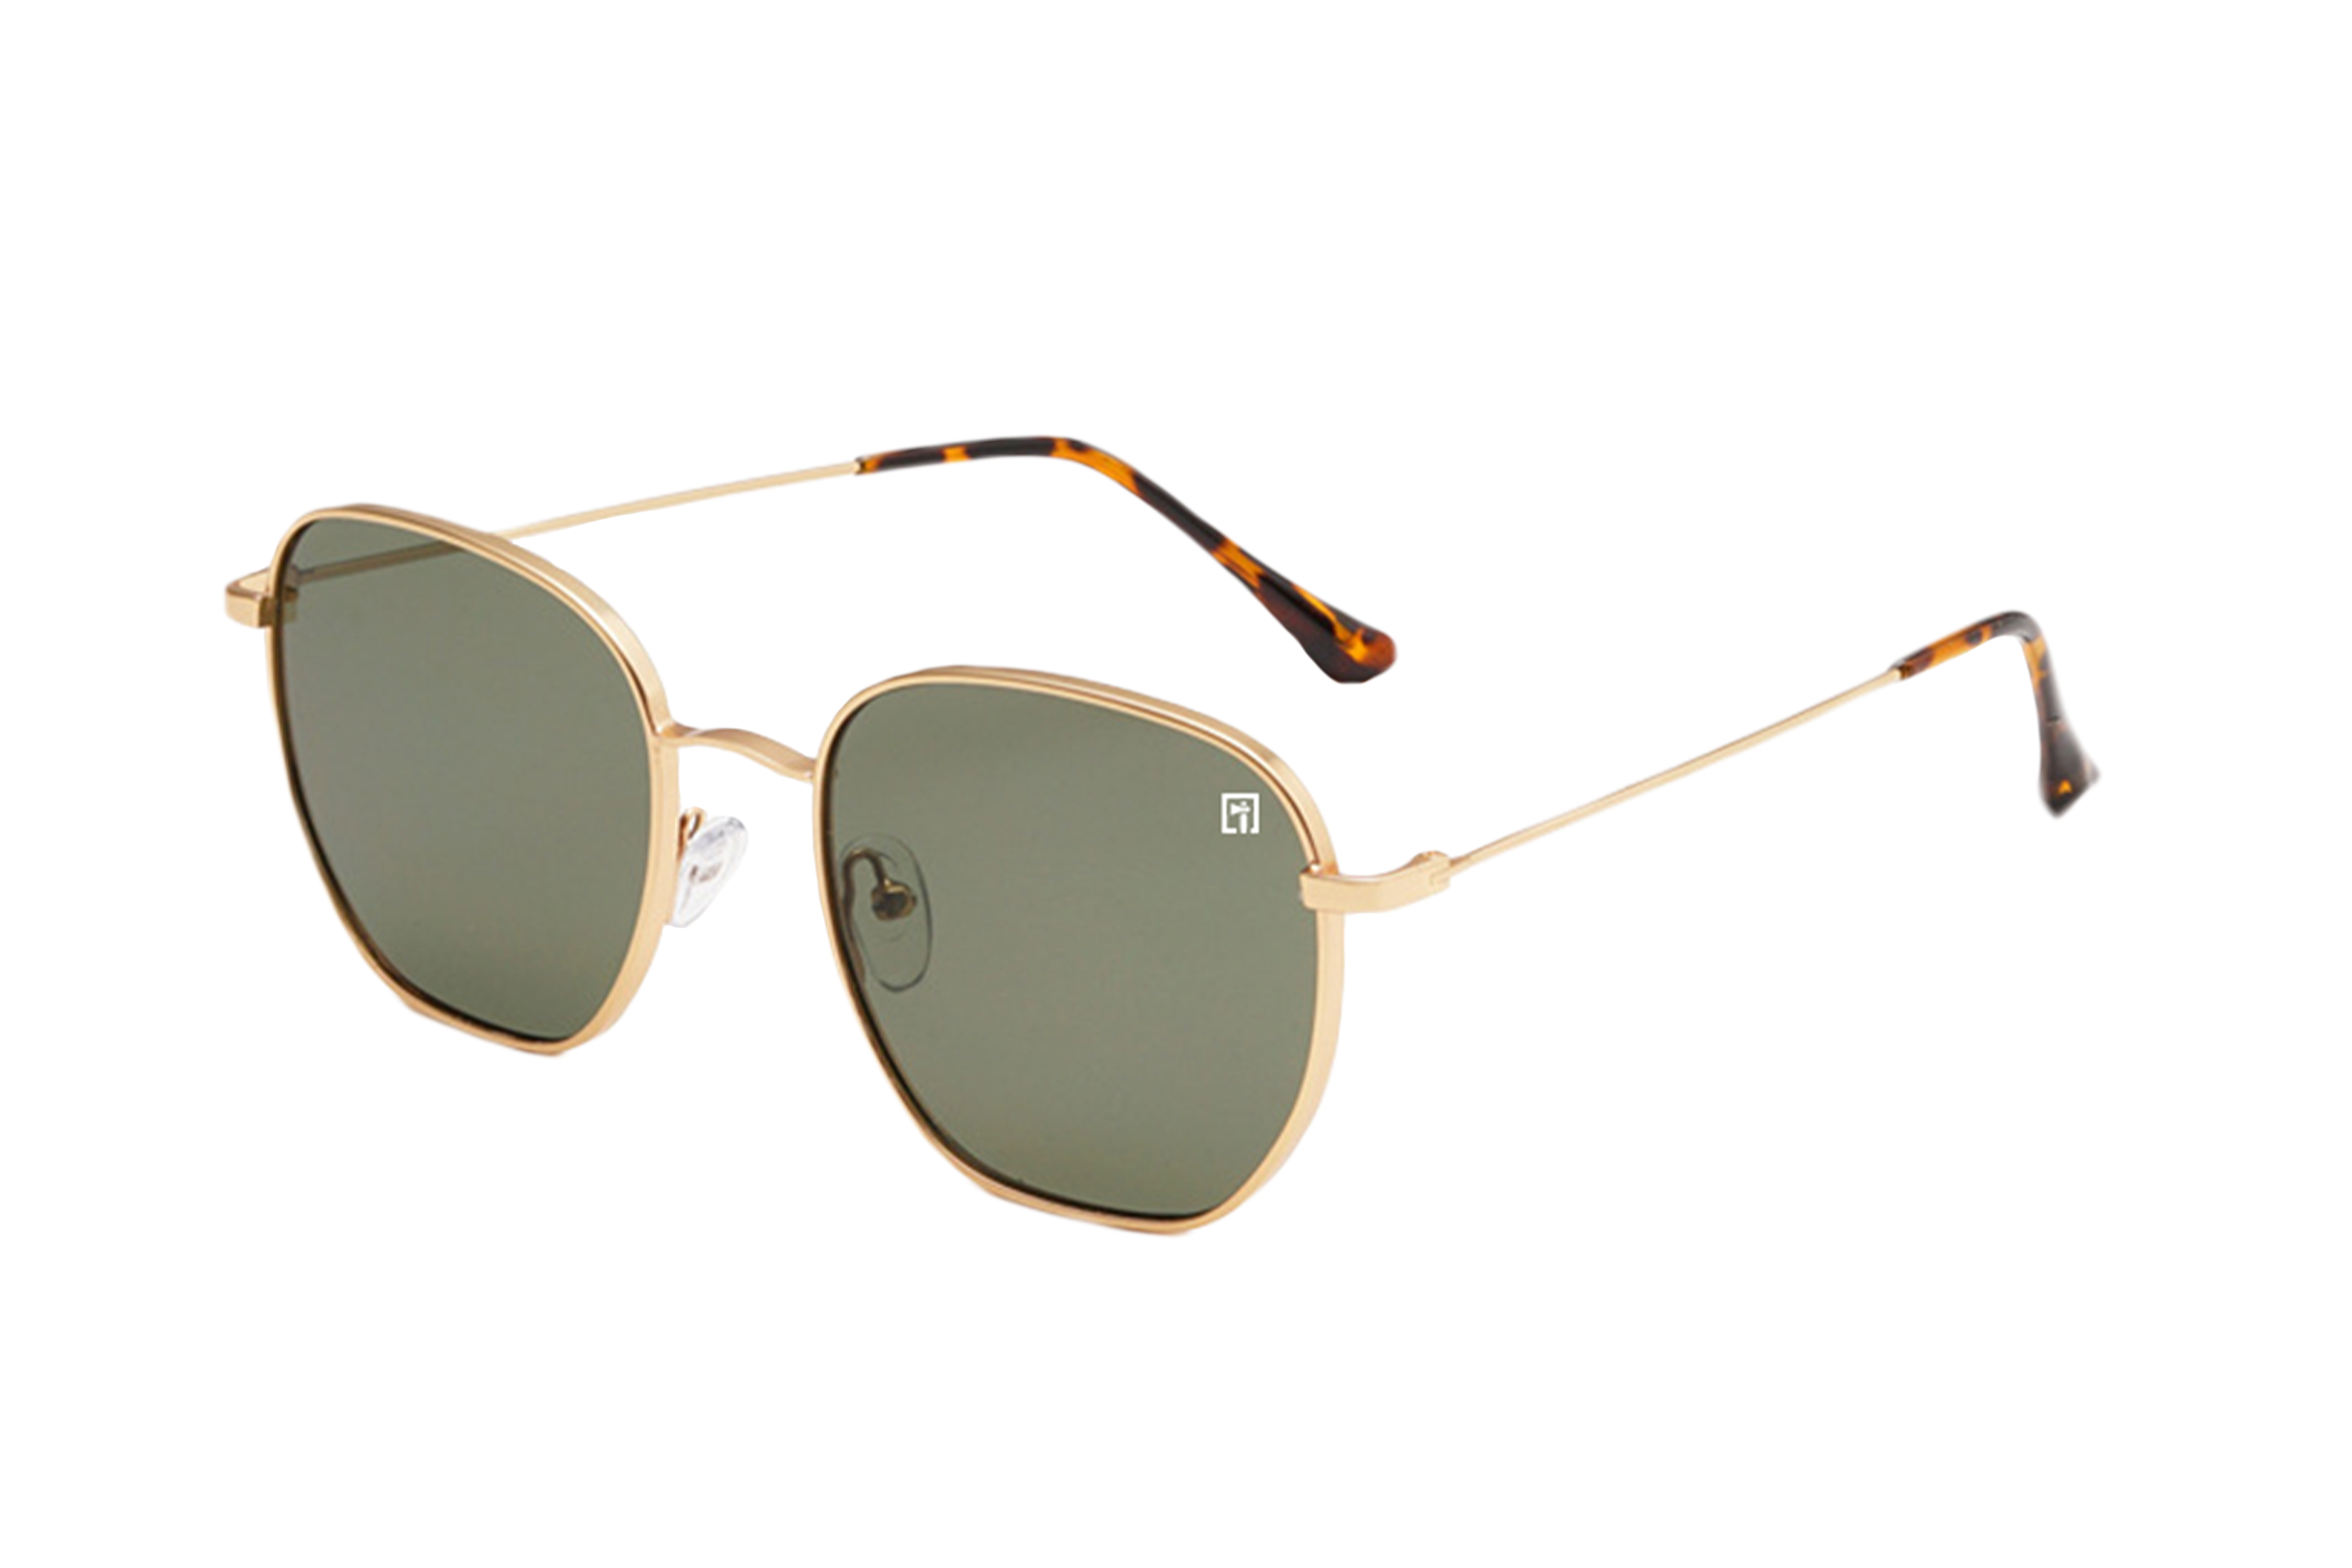 Tomahawk Shades Marksman Class Sunglasses for Men & Women - Impact Resistant Lenses & Full UV400 Protection